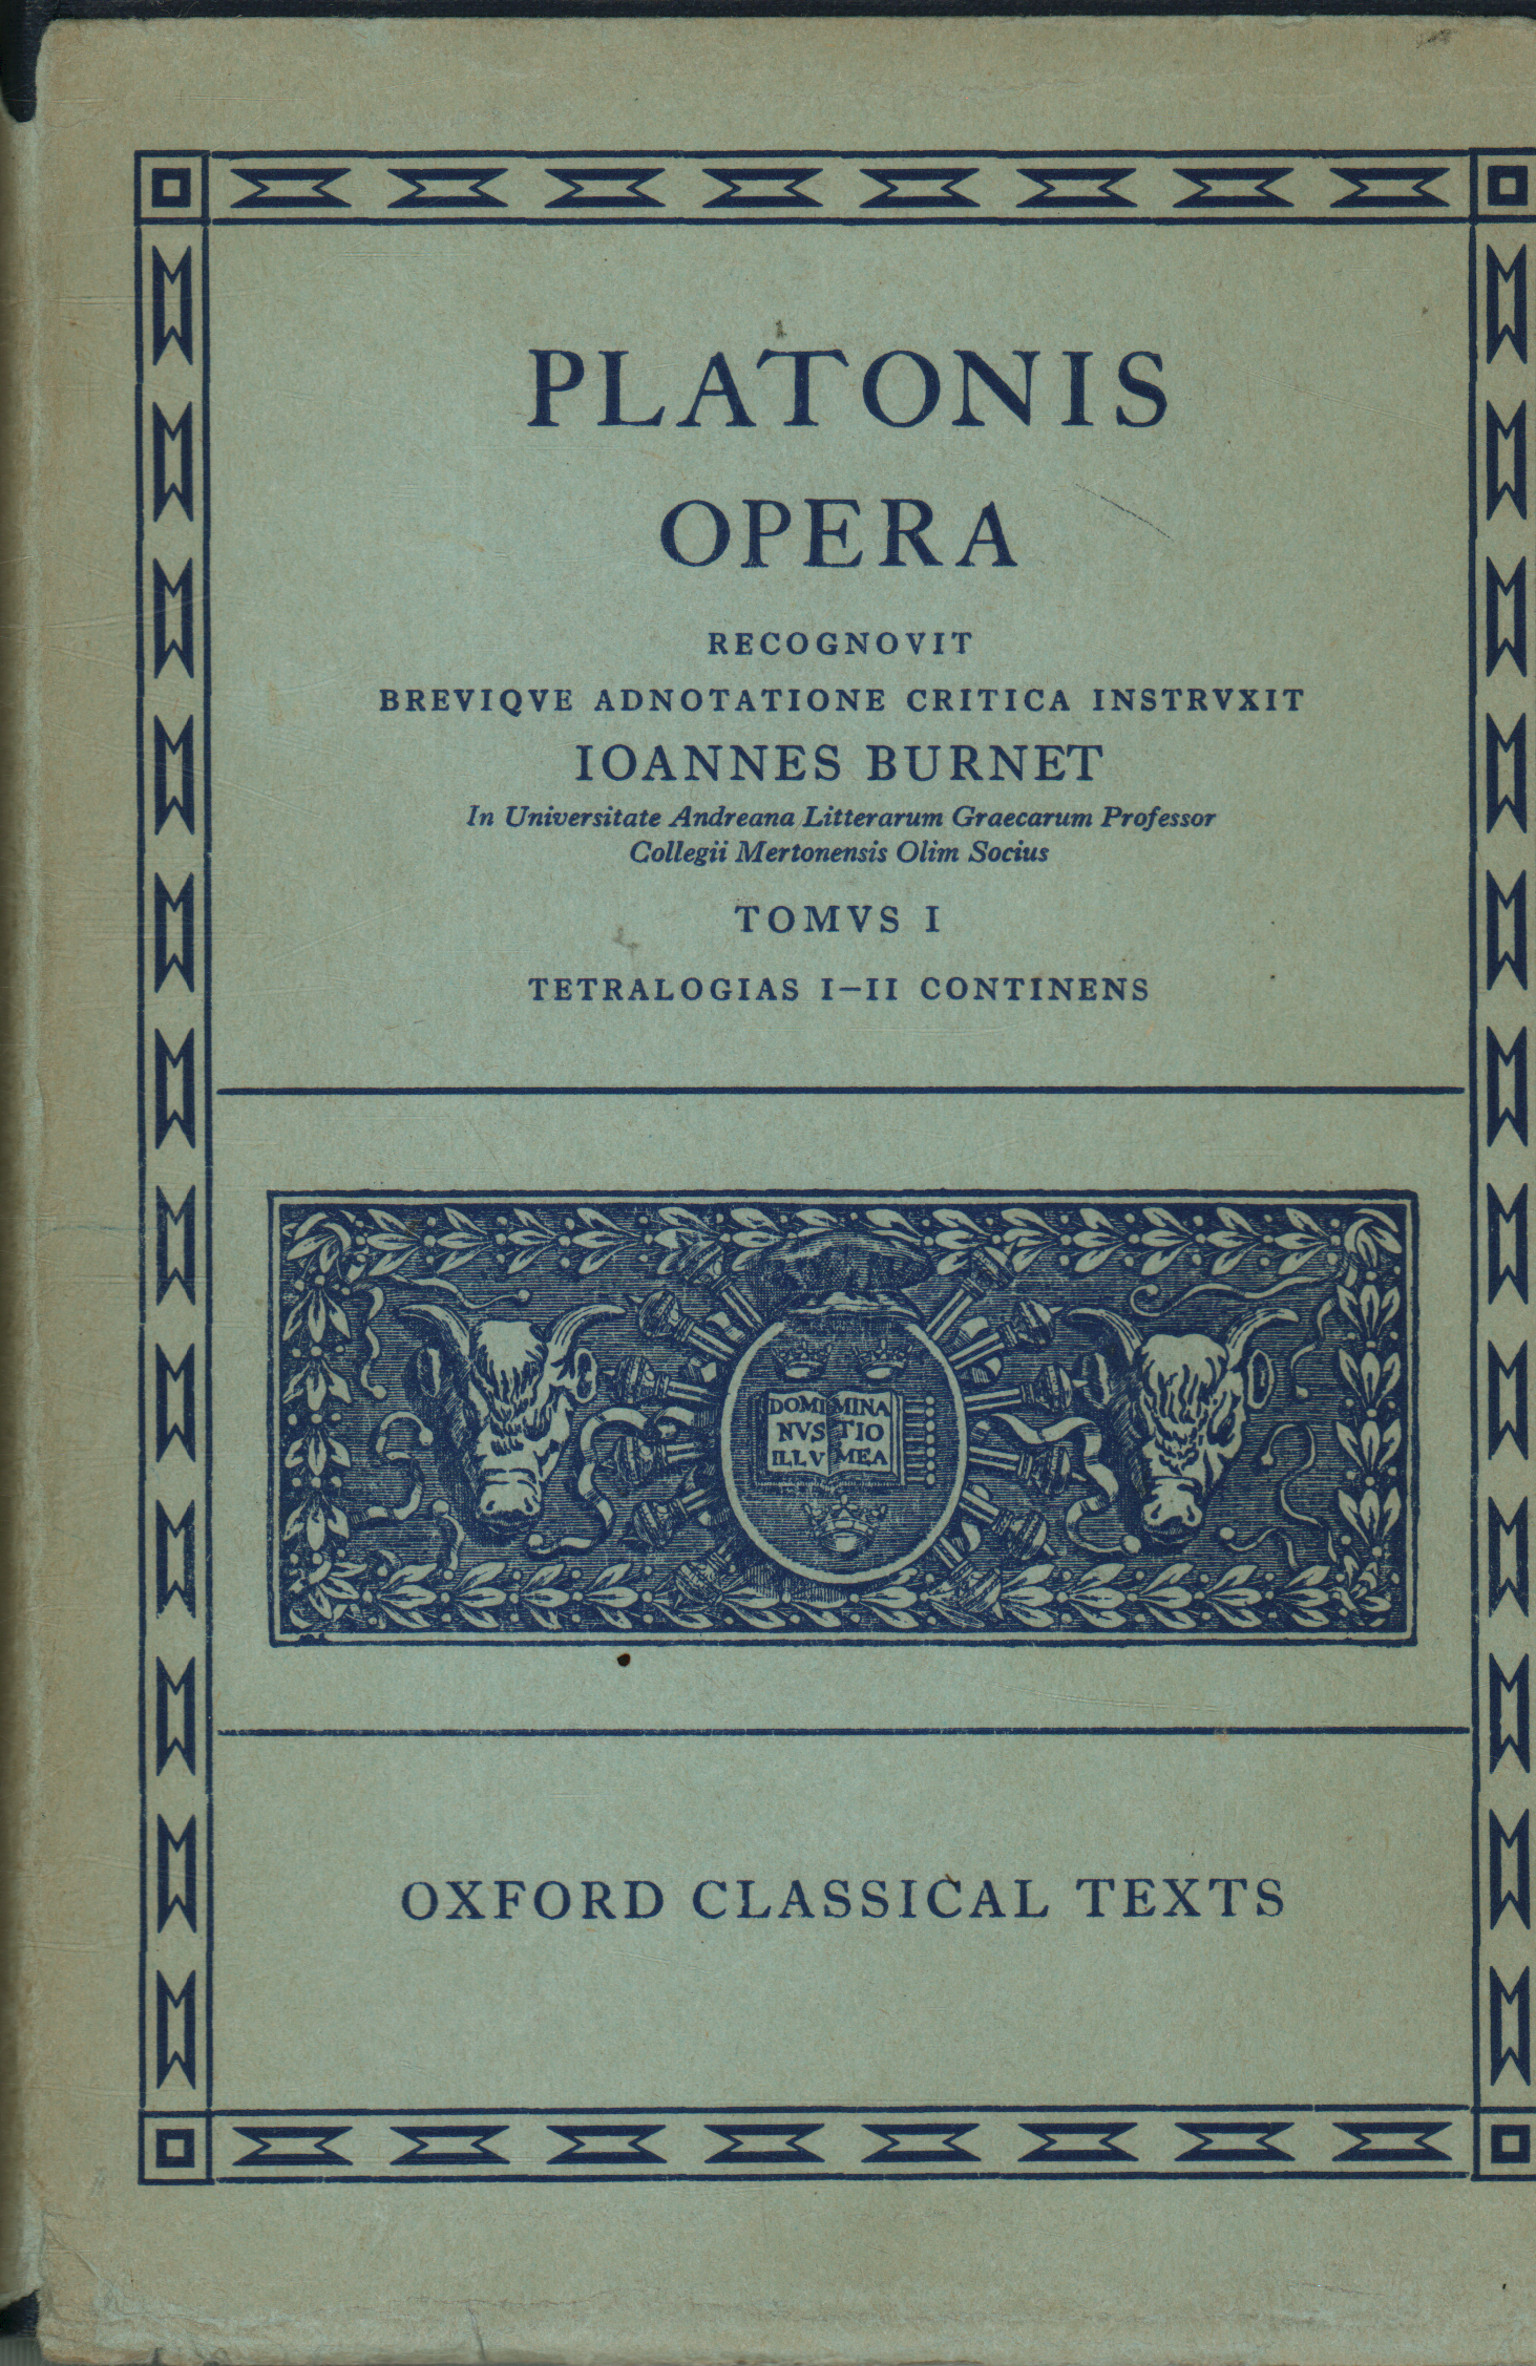 Ópera Platonis. Tomus I.Tetralogias I-II continen, Platonis